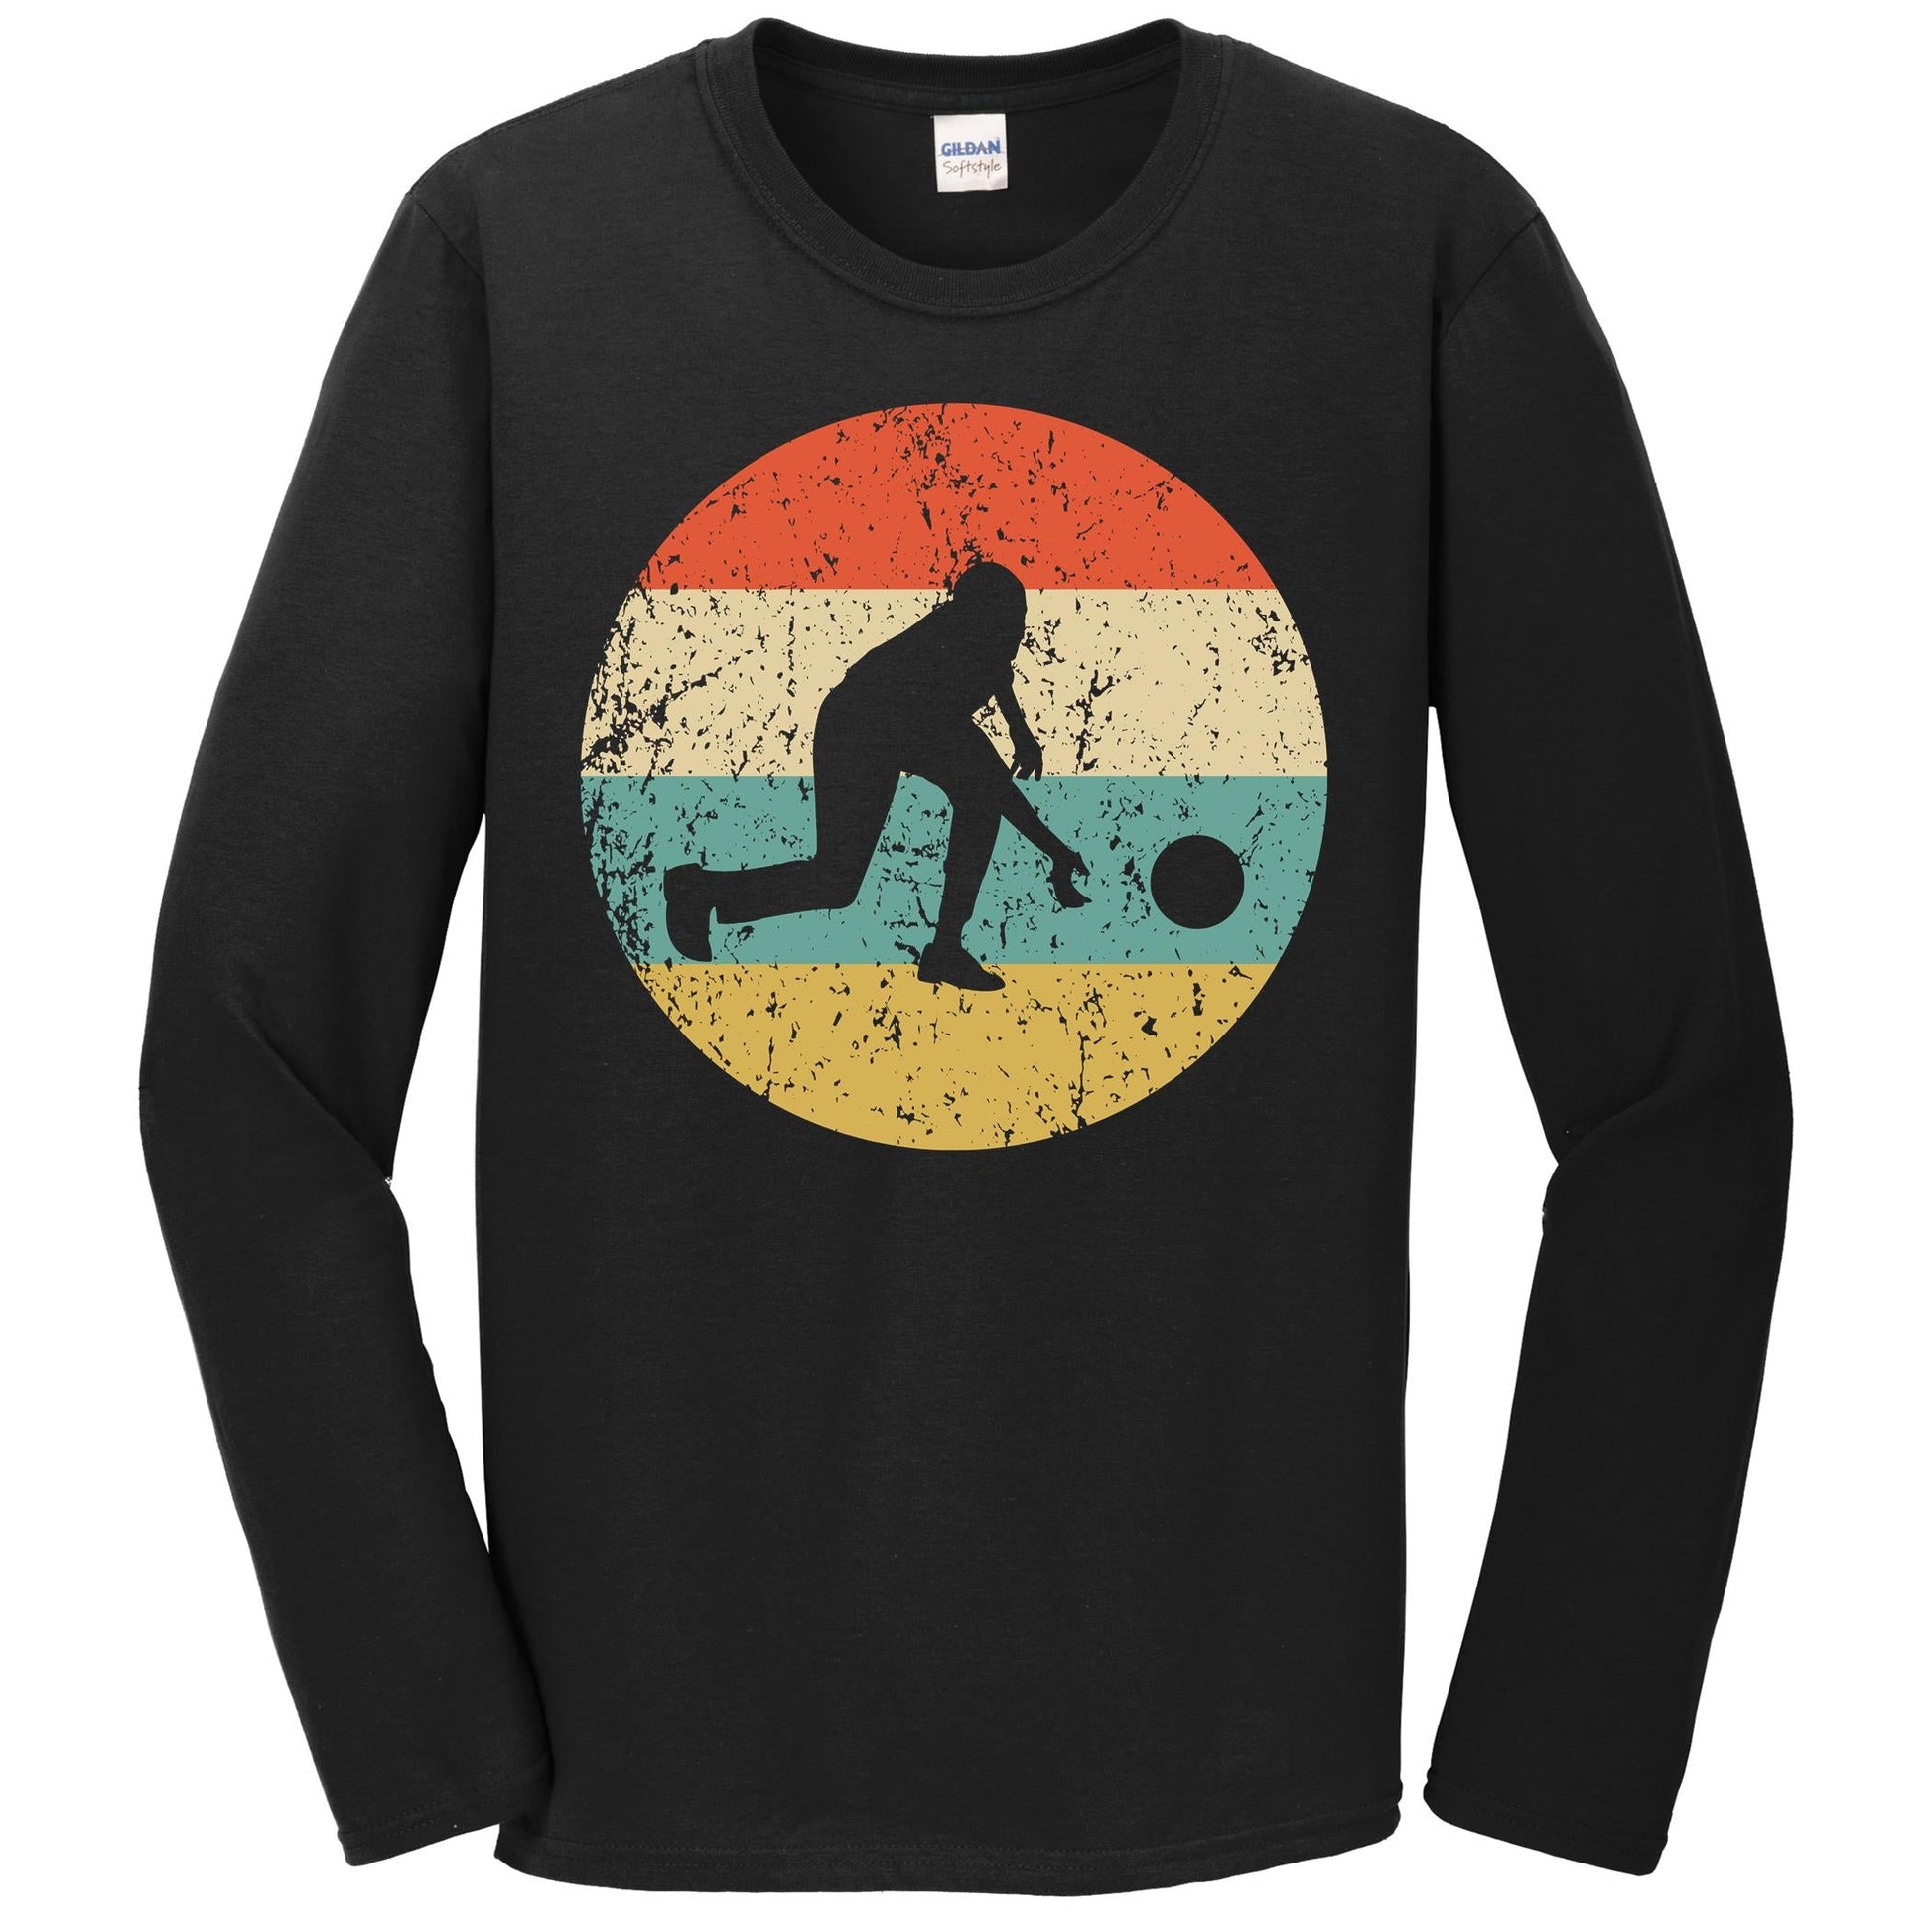 Bowling Shirt - Vintage Retro Bowler Long Sleeve T-Shirt